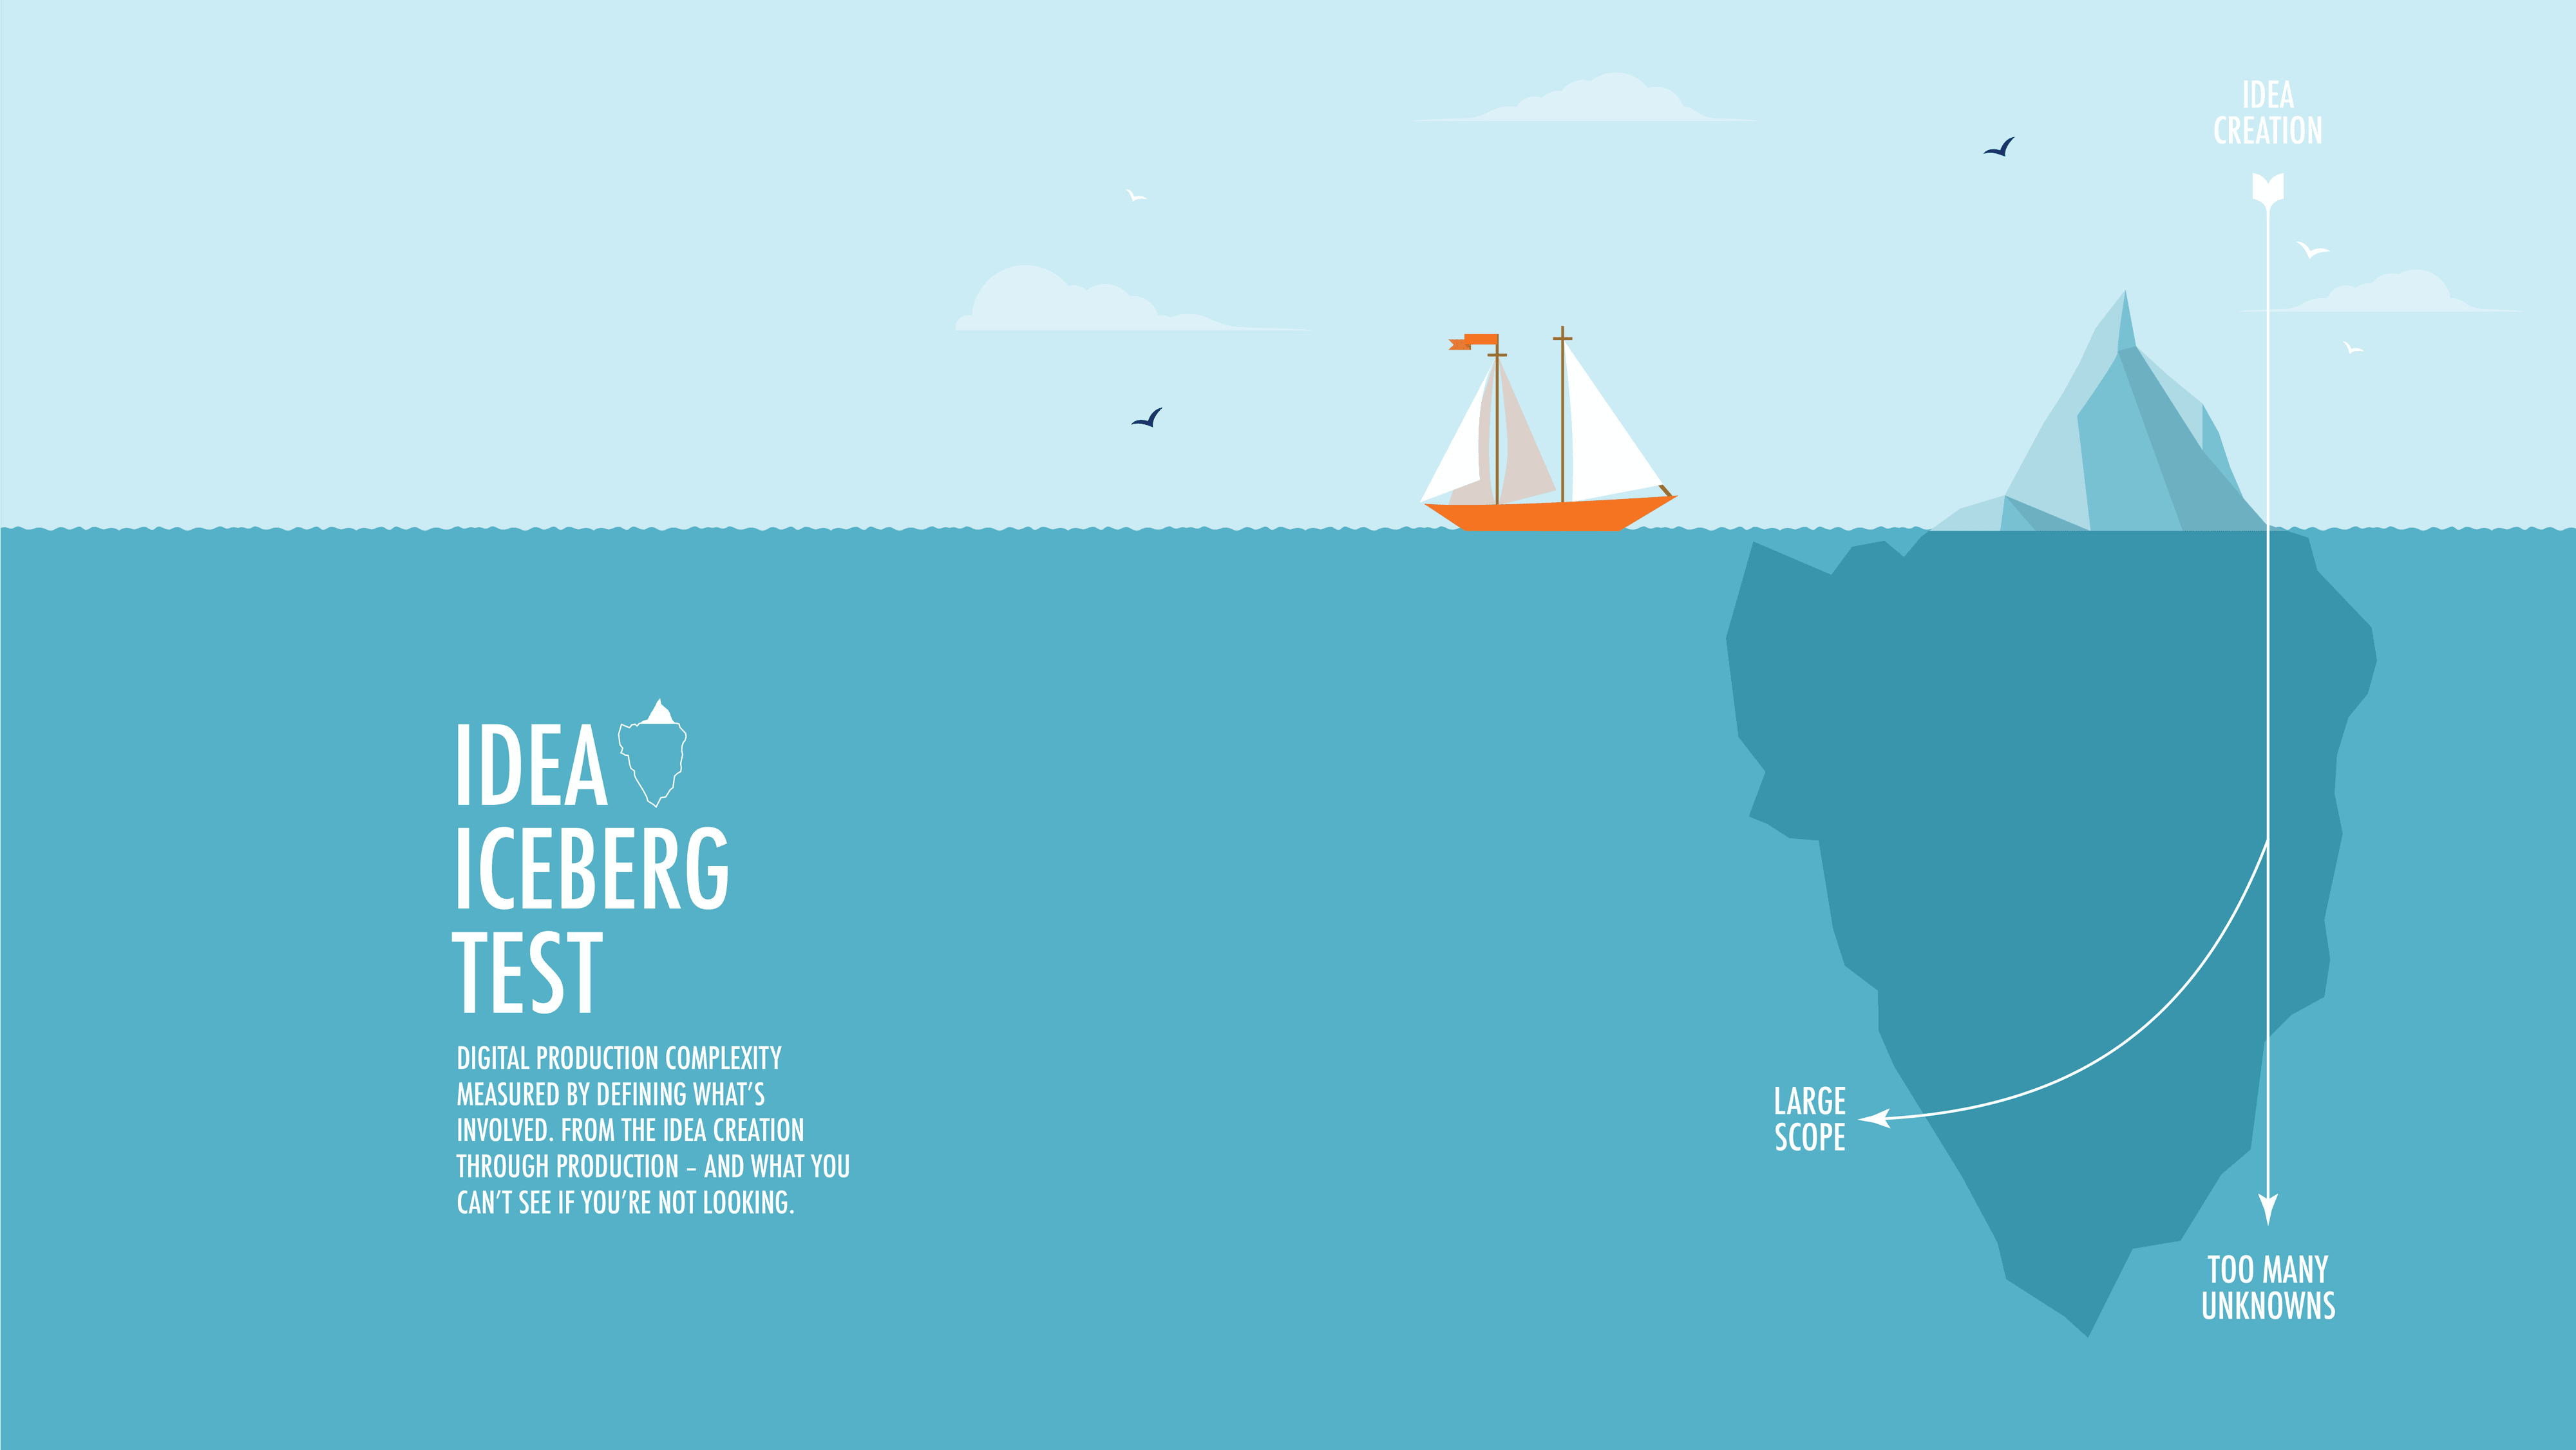 Idea Iceberg Test Infographic v1.0a (16x9)